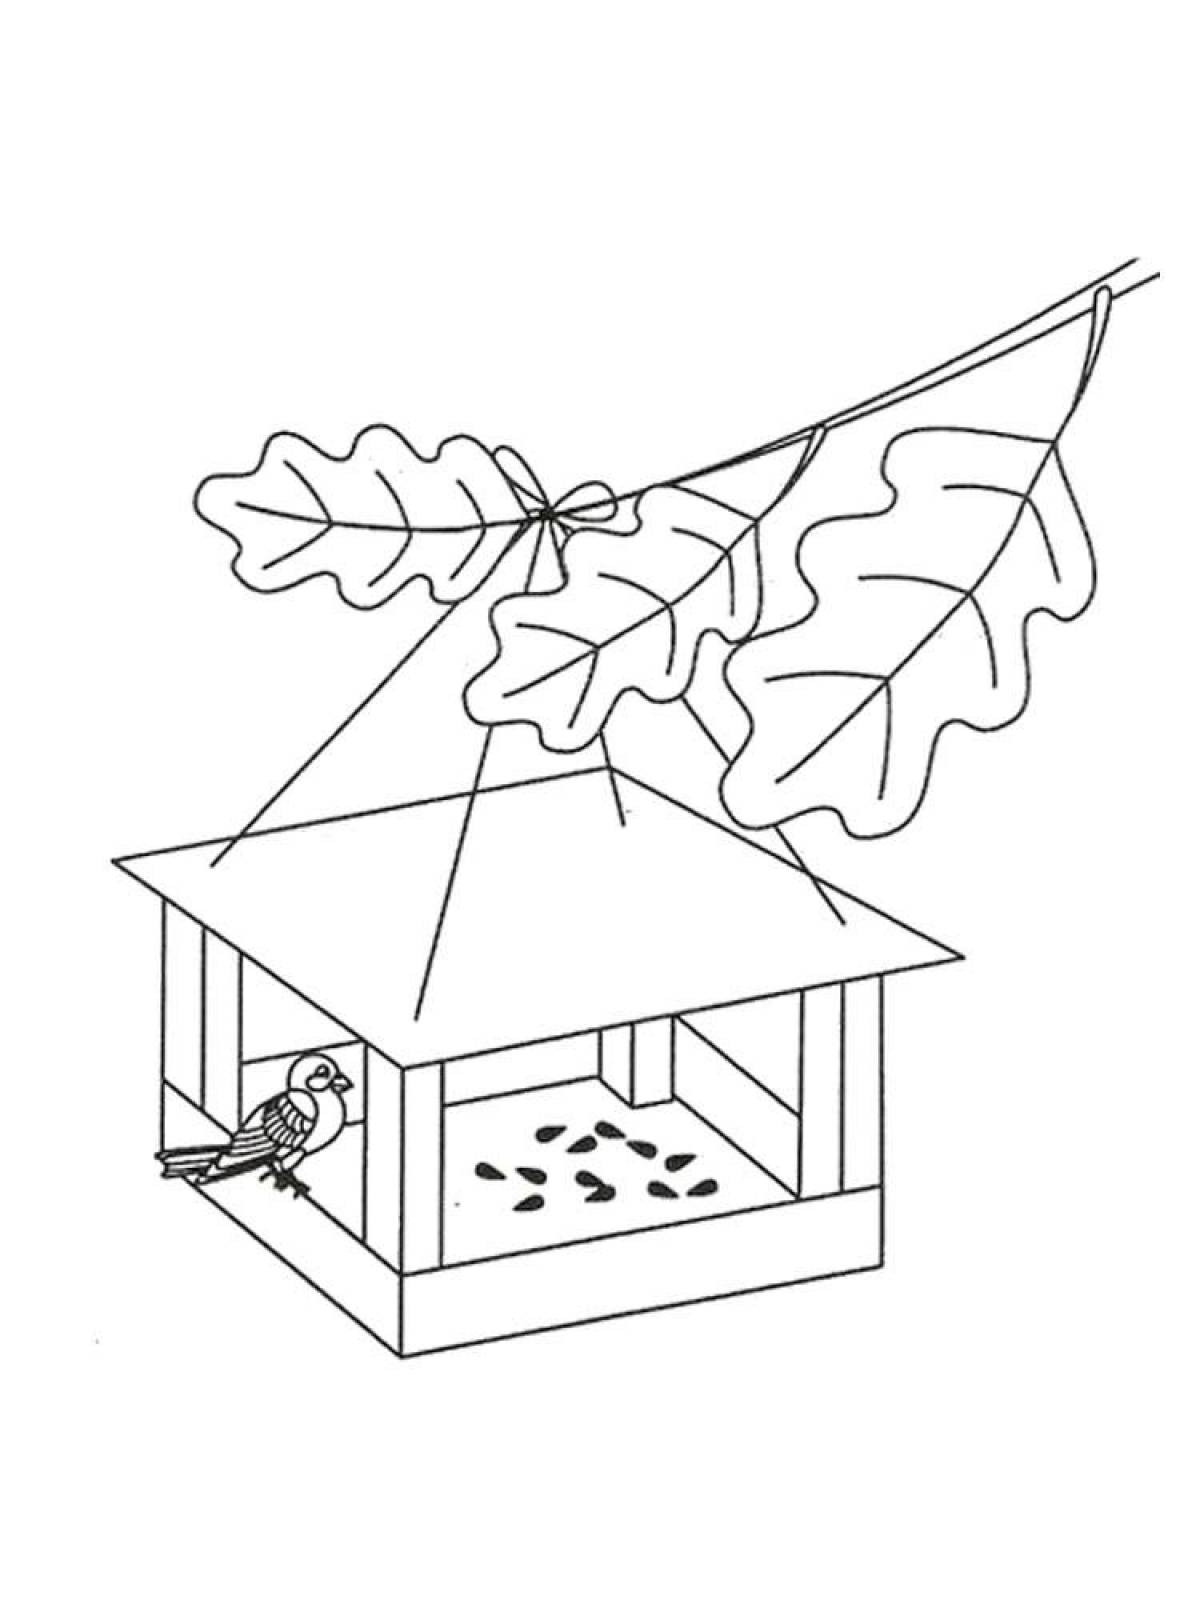 Раскраска яркая кормушка для птиц для детей